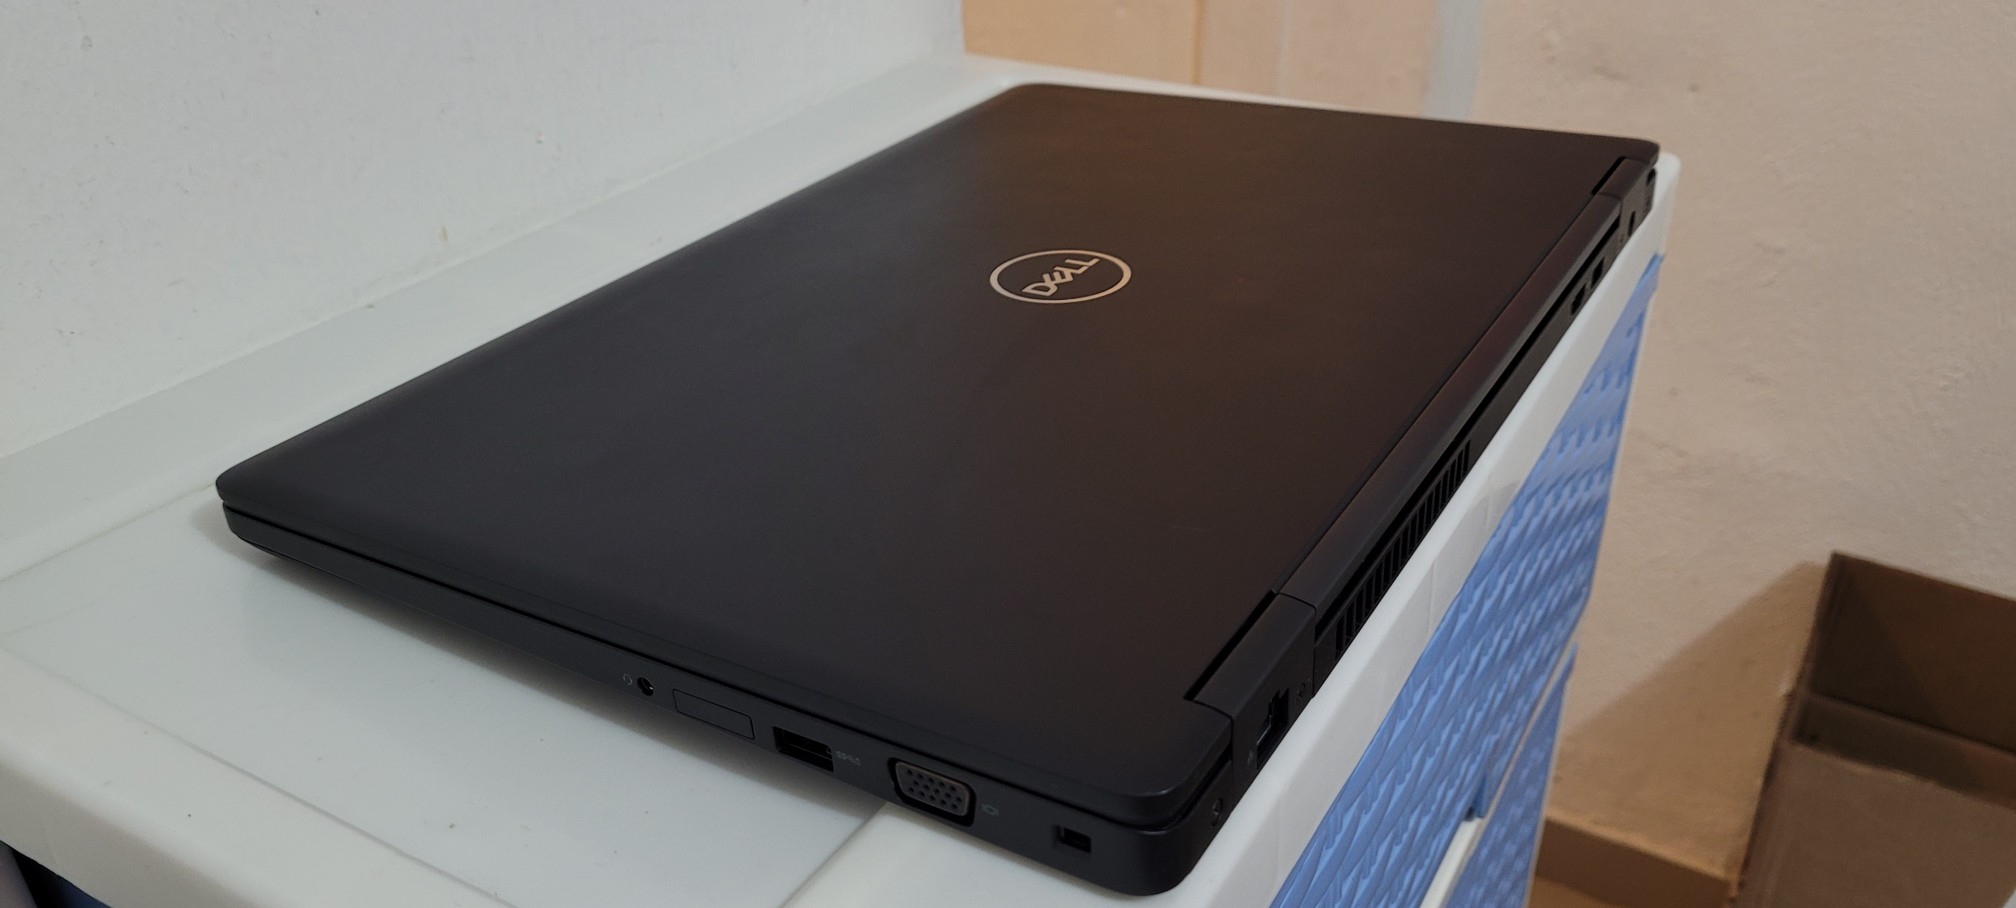 computadoras y laptops - Laptop Dell 5570 17 Pulg Core i7 6ta Ram 16gb Disco 256gb SSD Aty Radeon R7 2